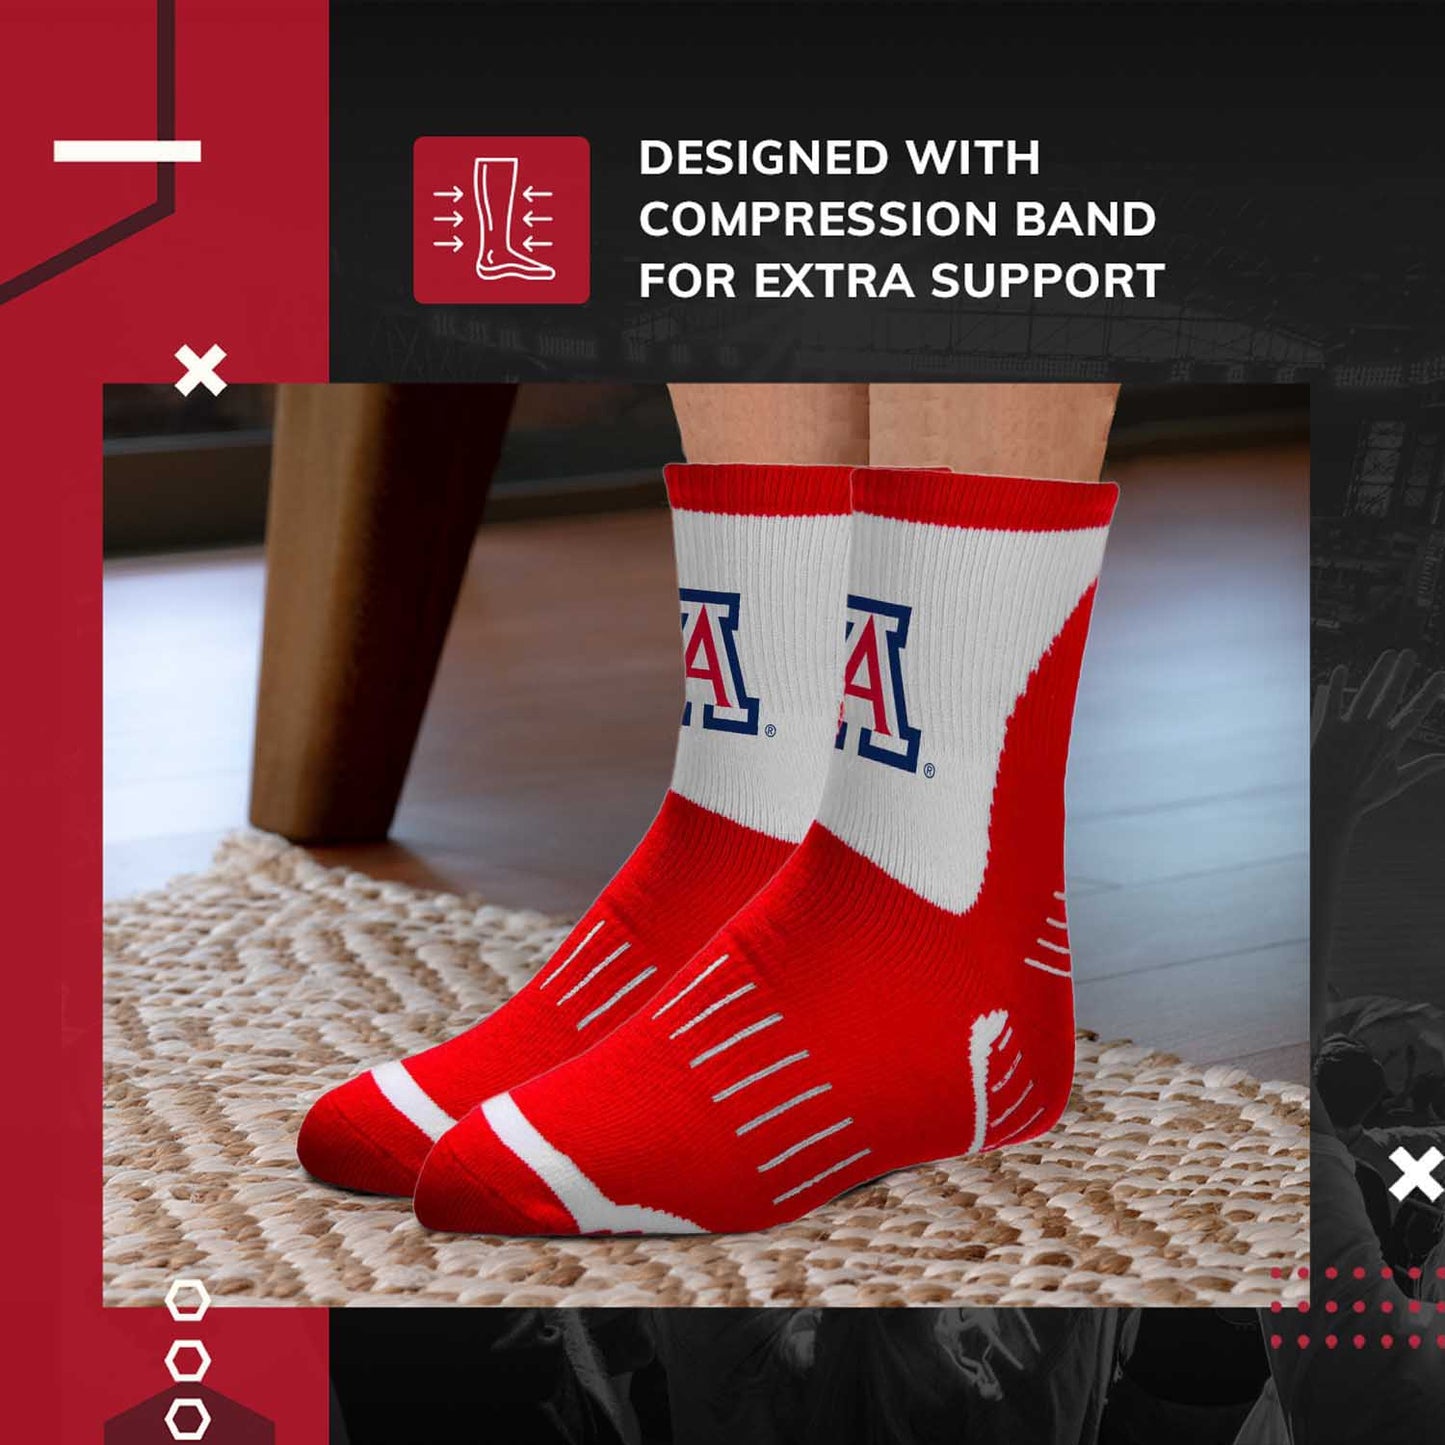 Arizona Wildcats NCAA Youth Surge Team Mascot Quarter Socks - Red